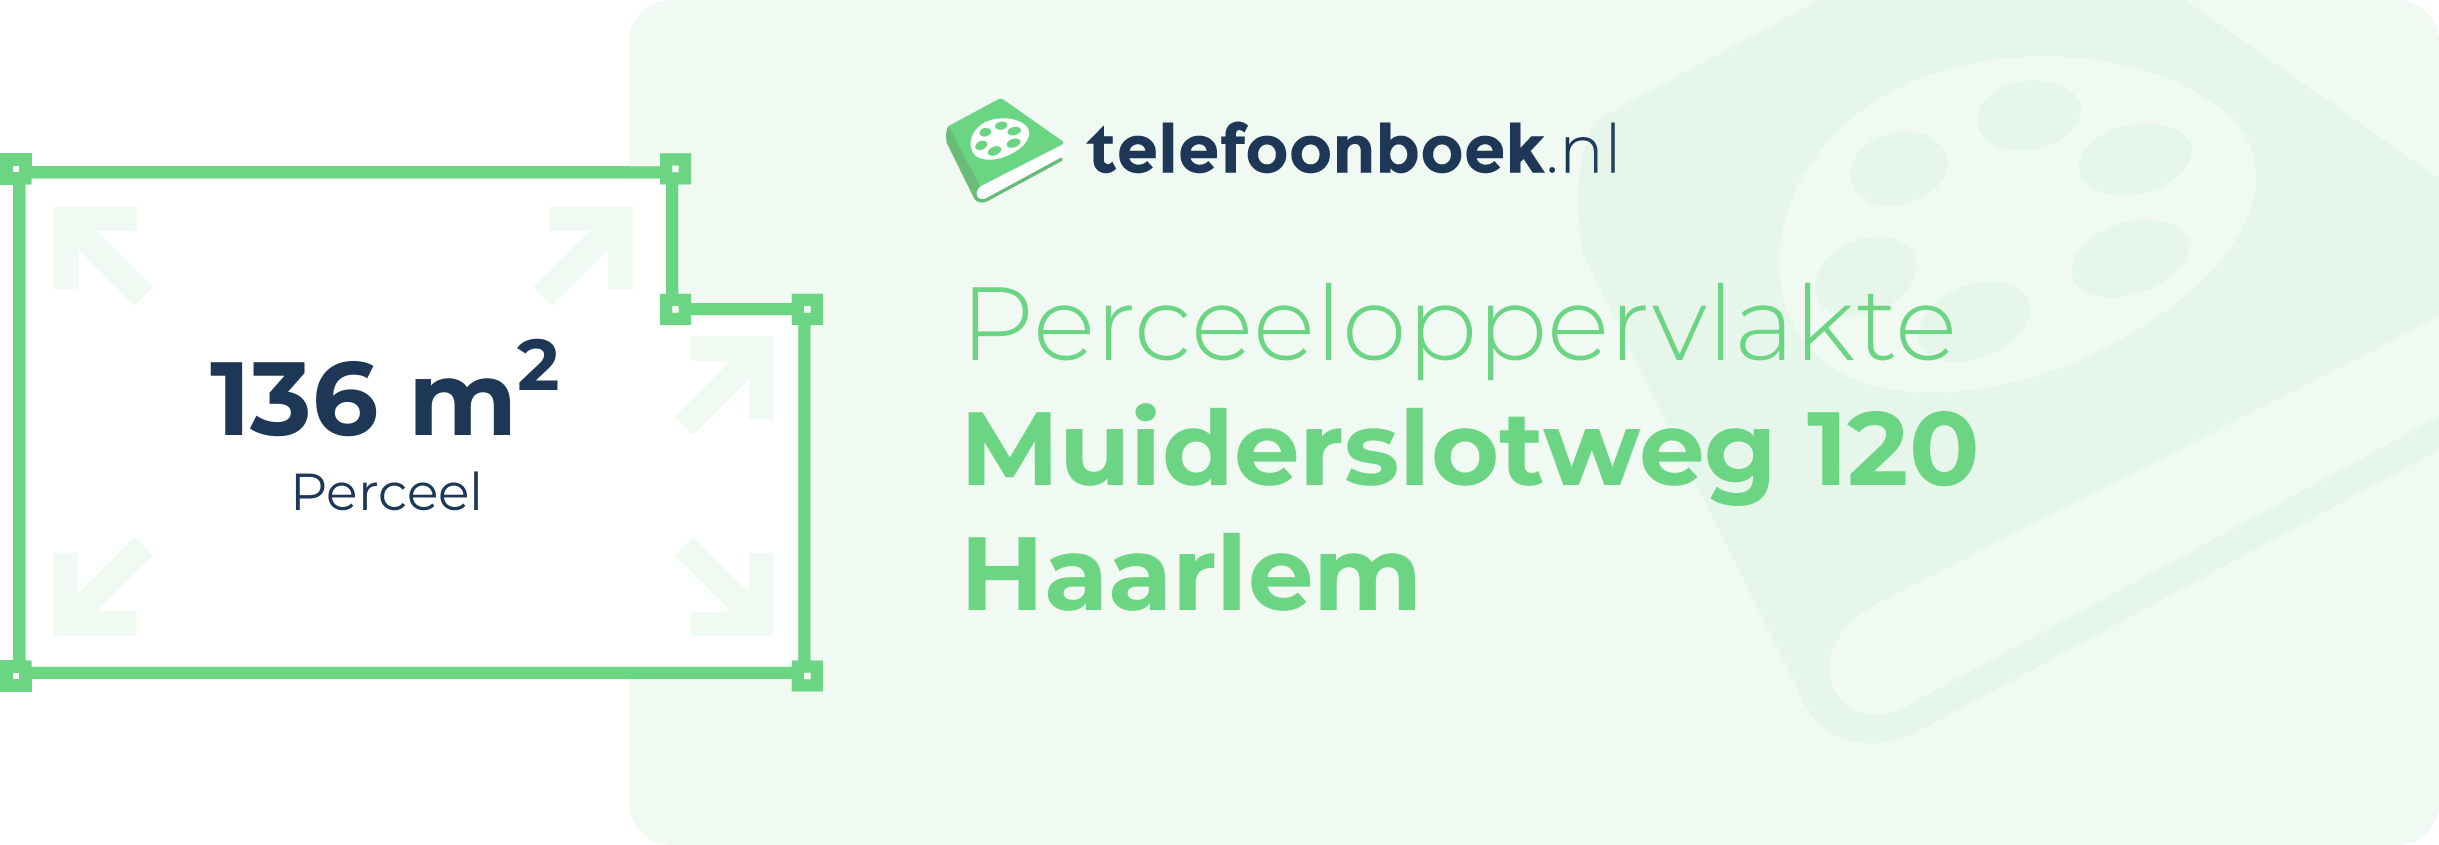 Perceeloppervlakte Muiderslotweg 120 Haarlem